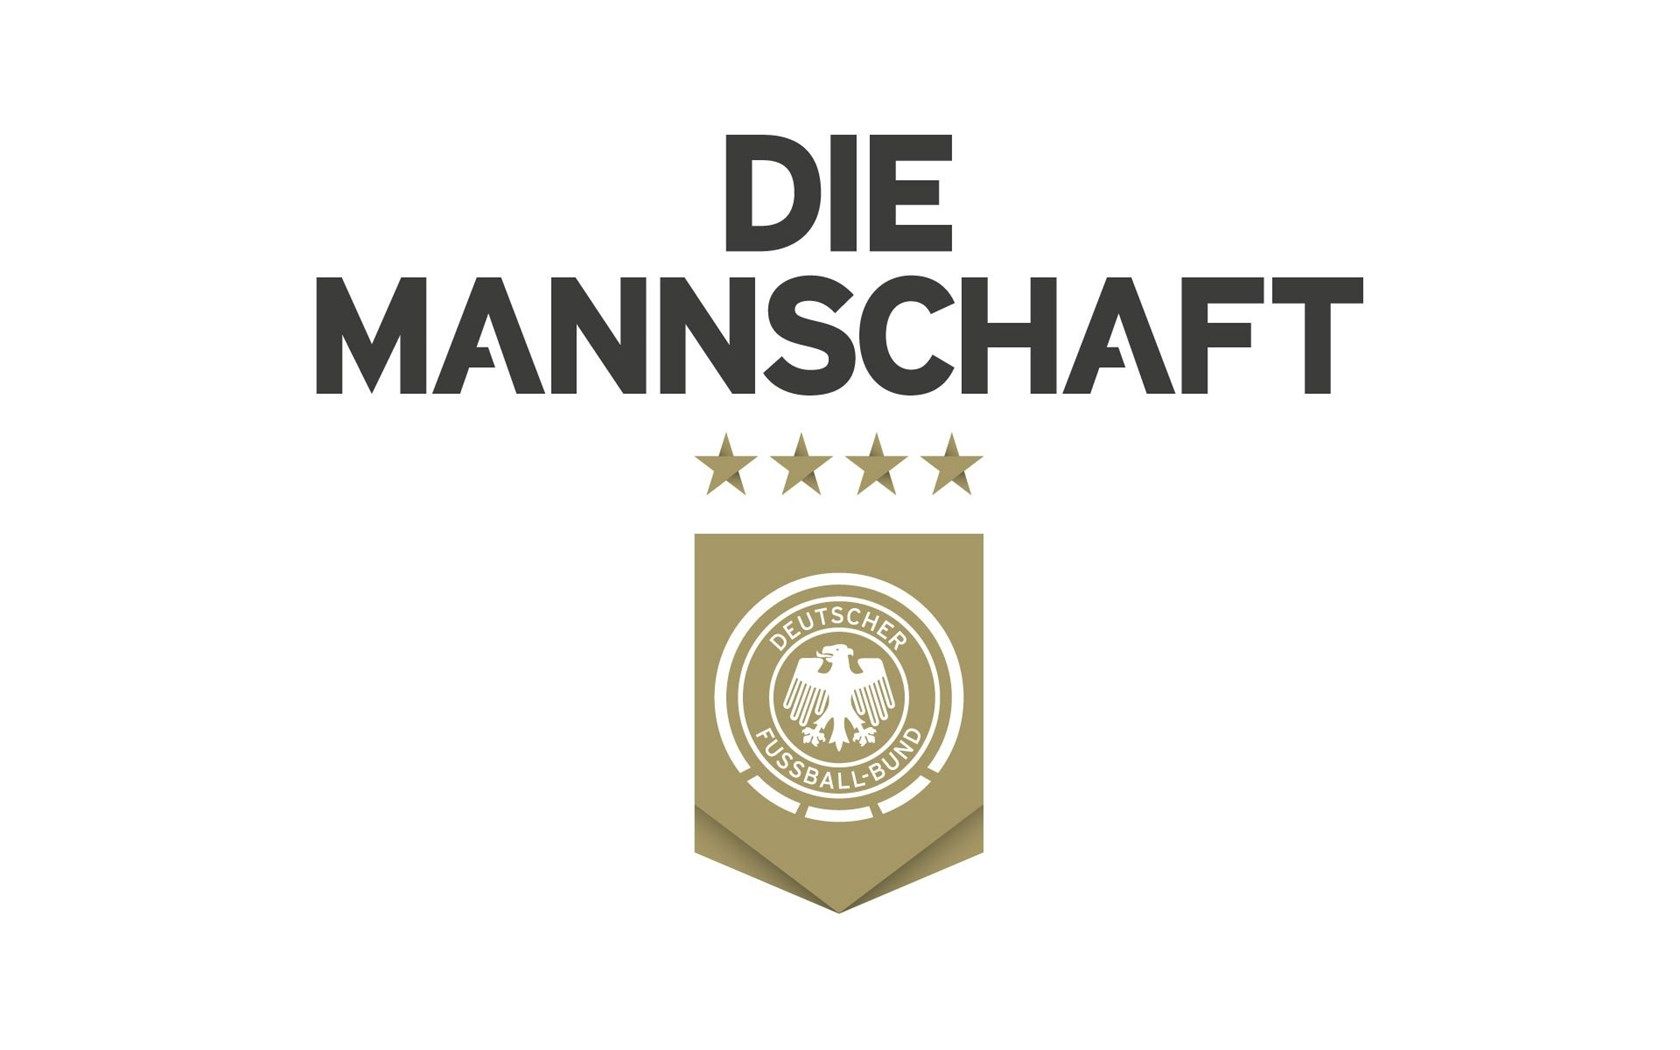 Die Mannschaft Germany Football Team Logo Wallpaper Desktop Background